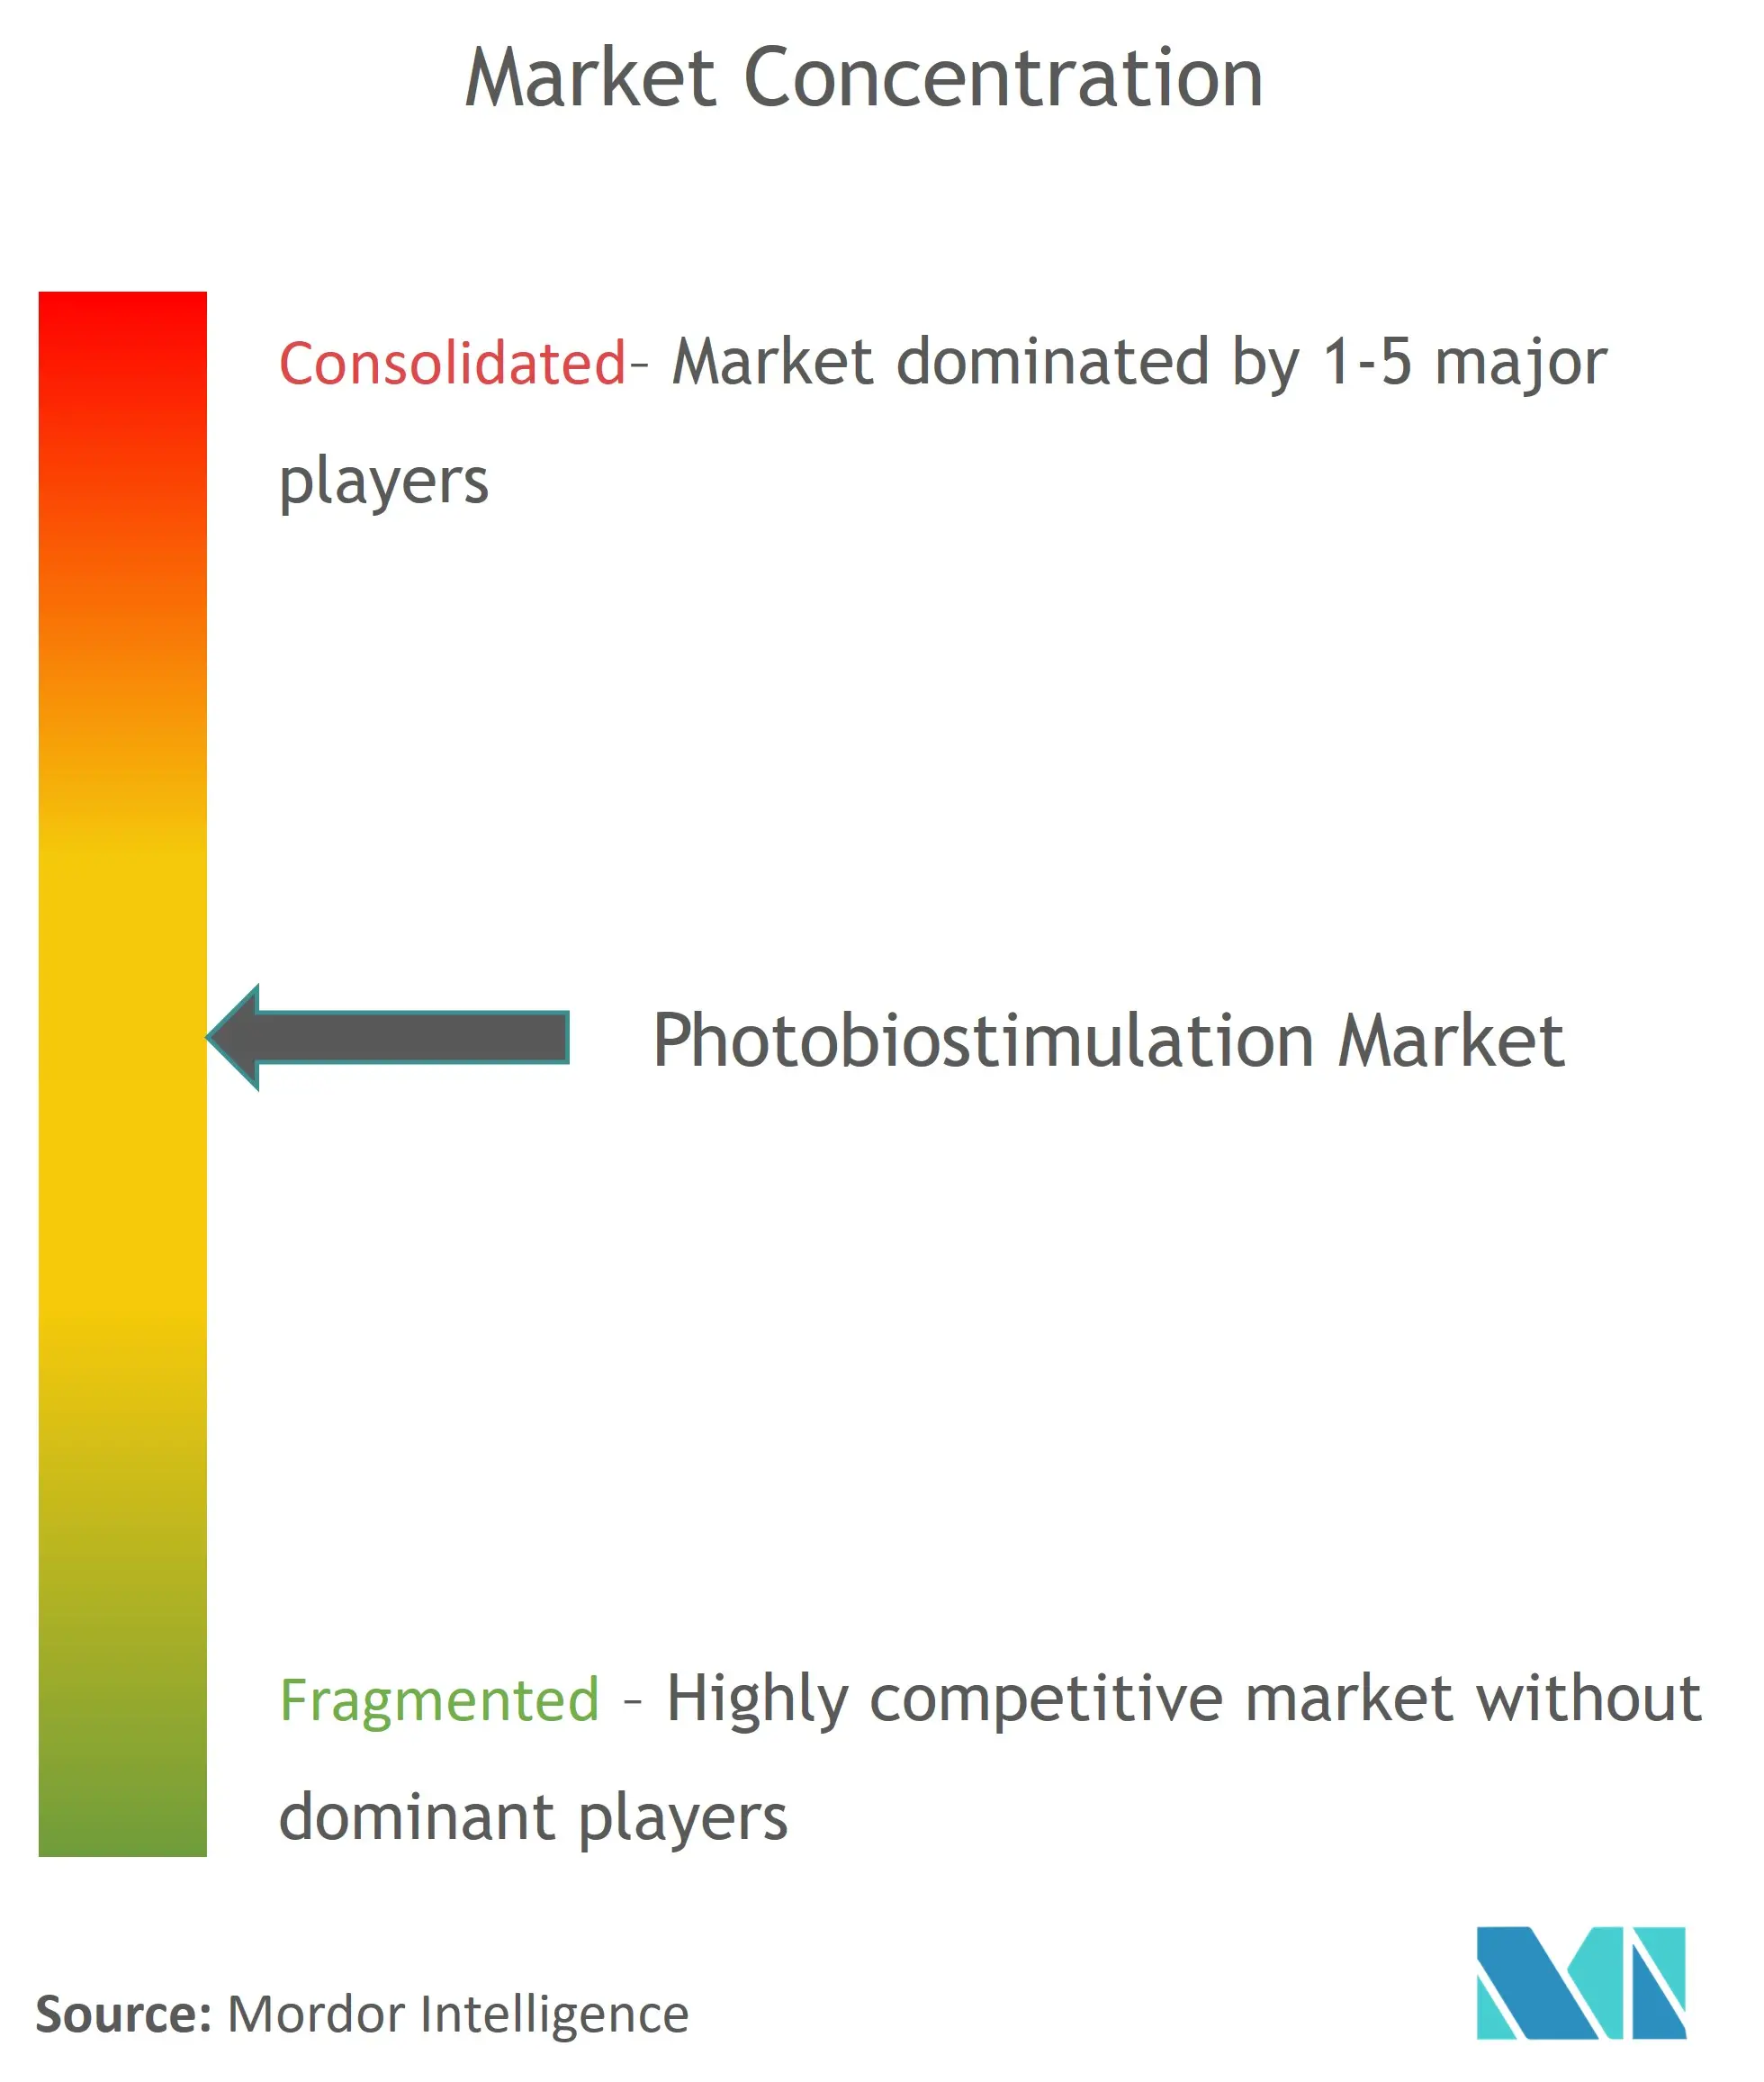 Photobiostimulation Market Concentration